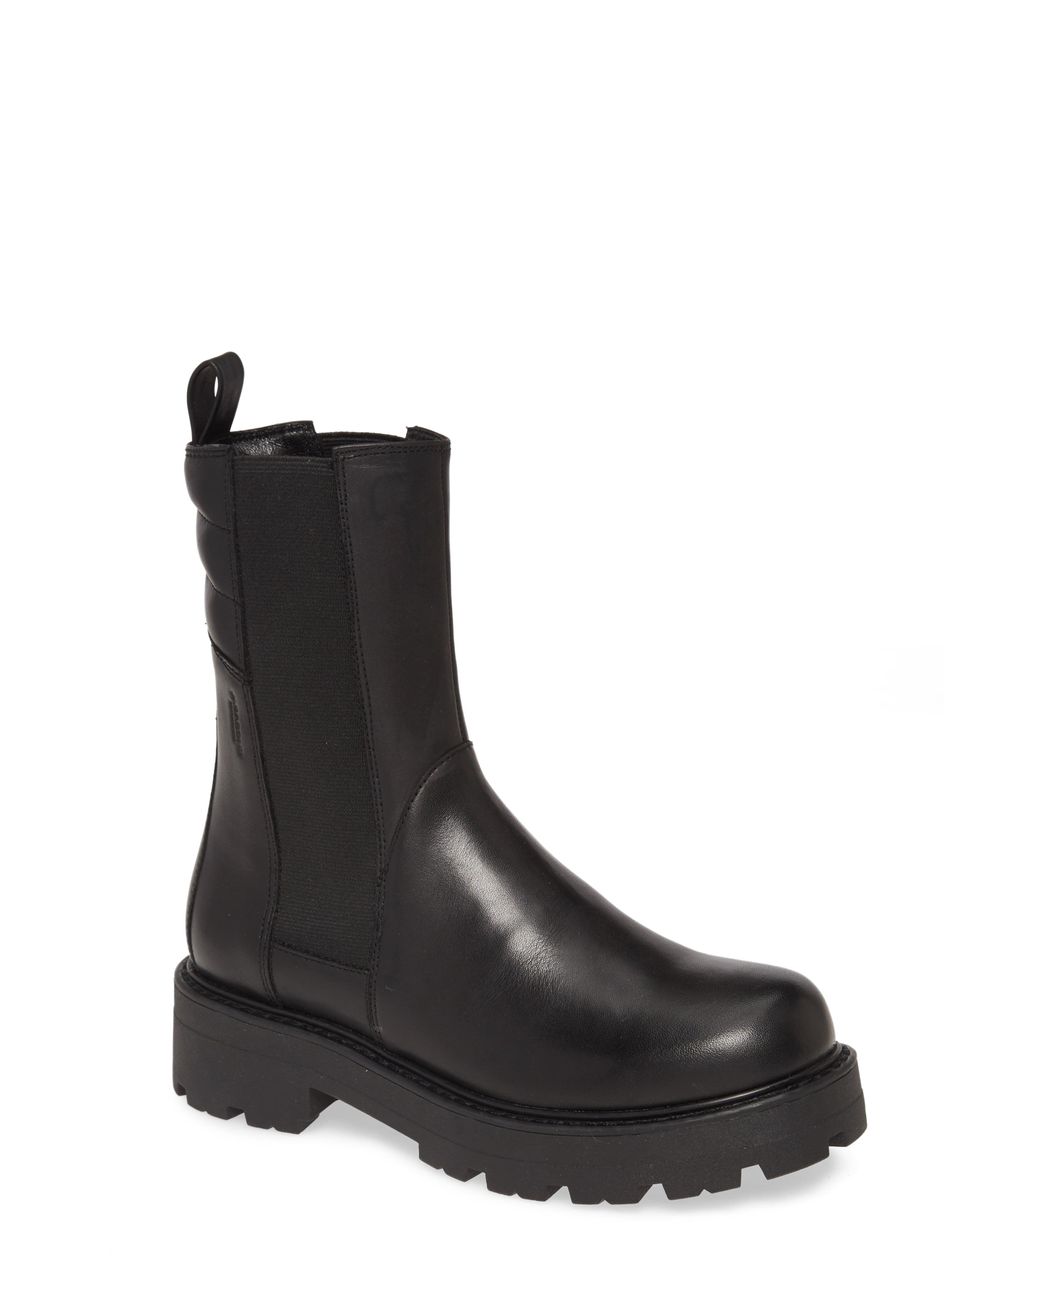 vagabond black leather boots